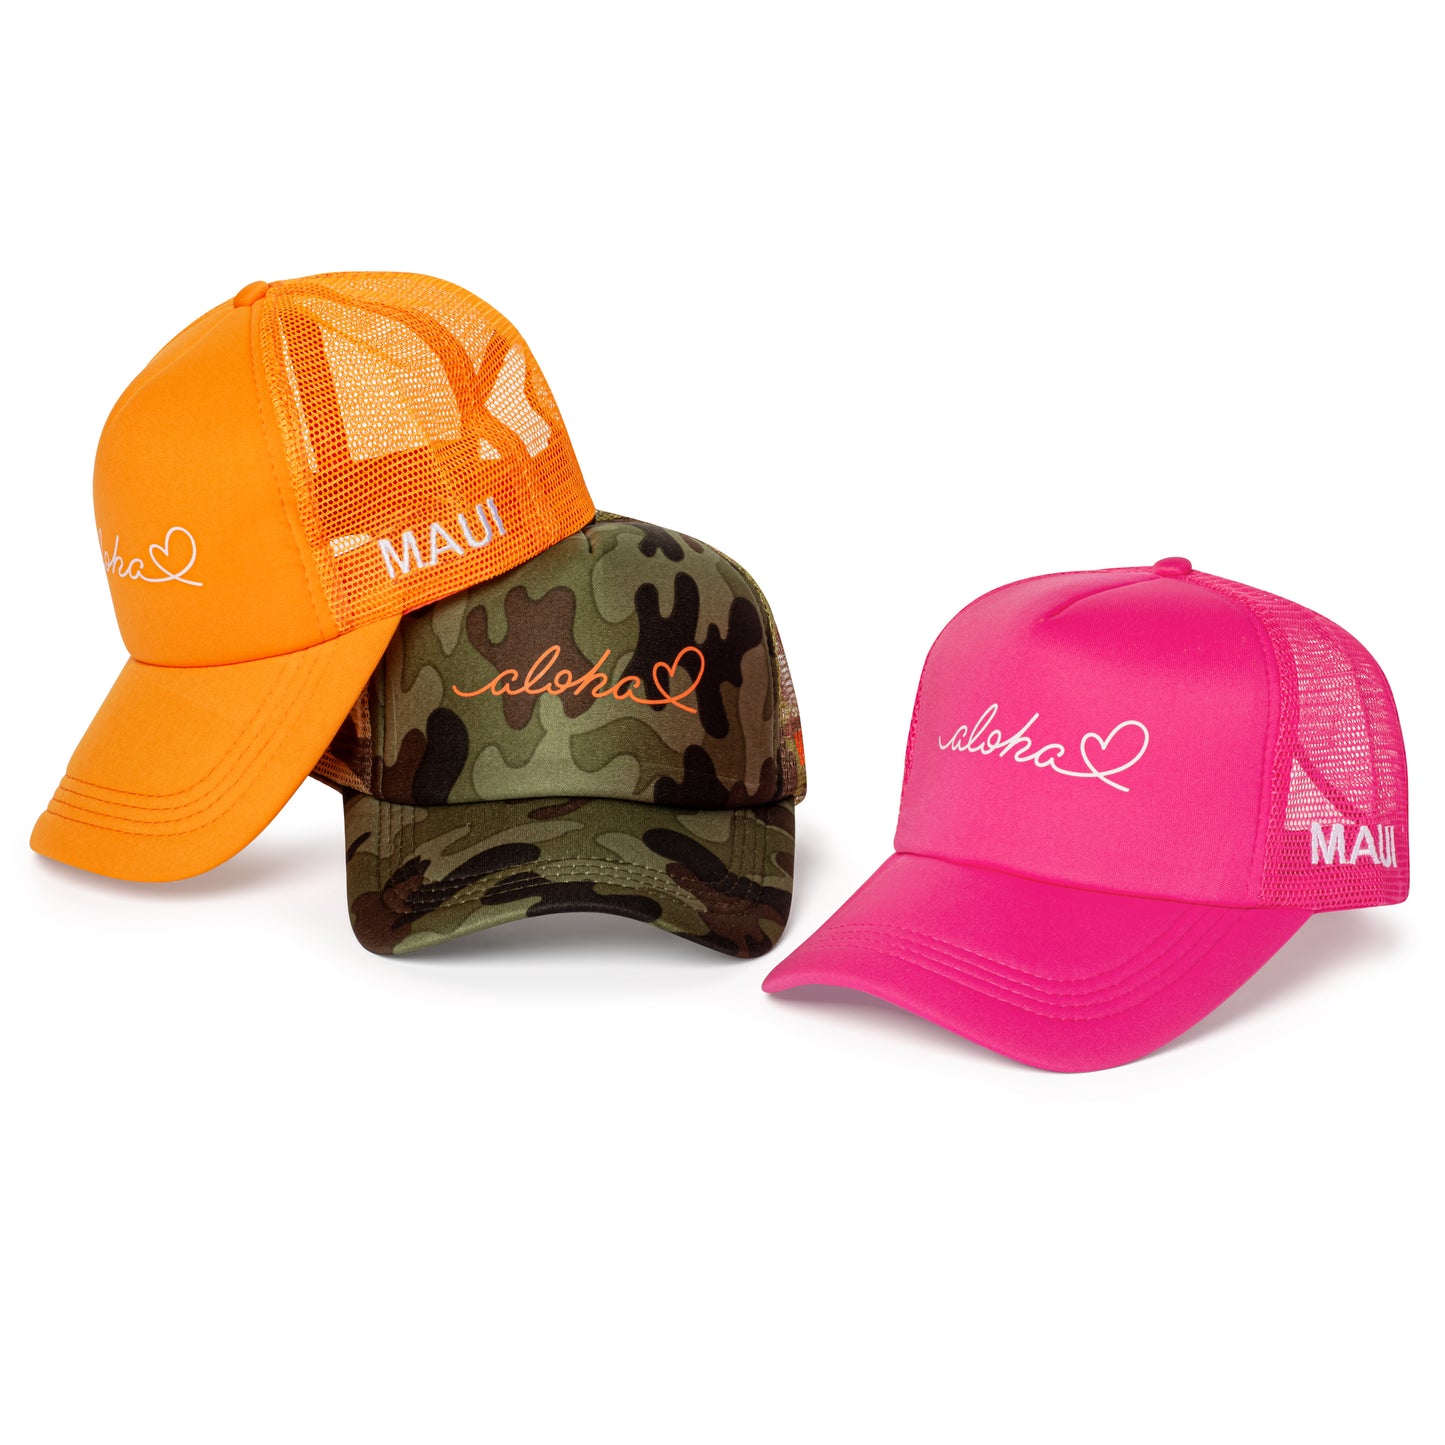 Aloha Love Maui Trucker Hat